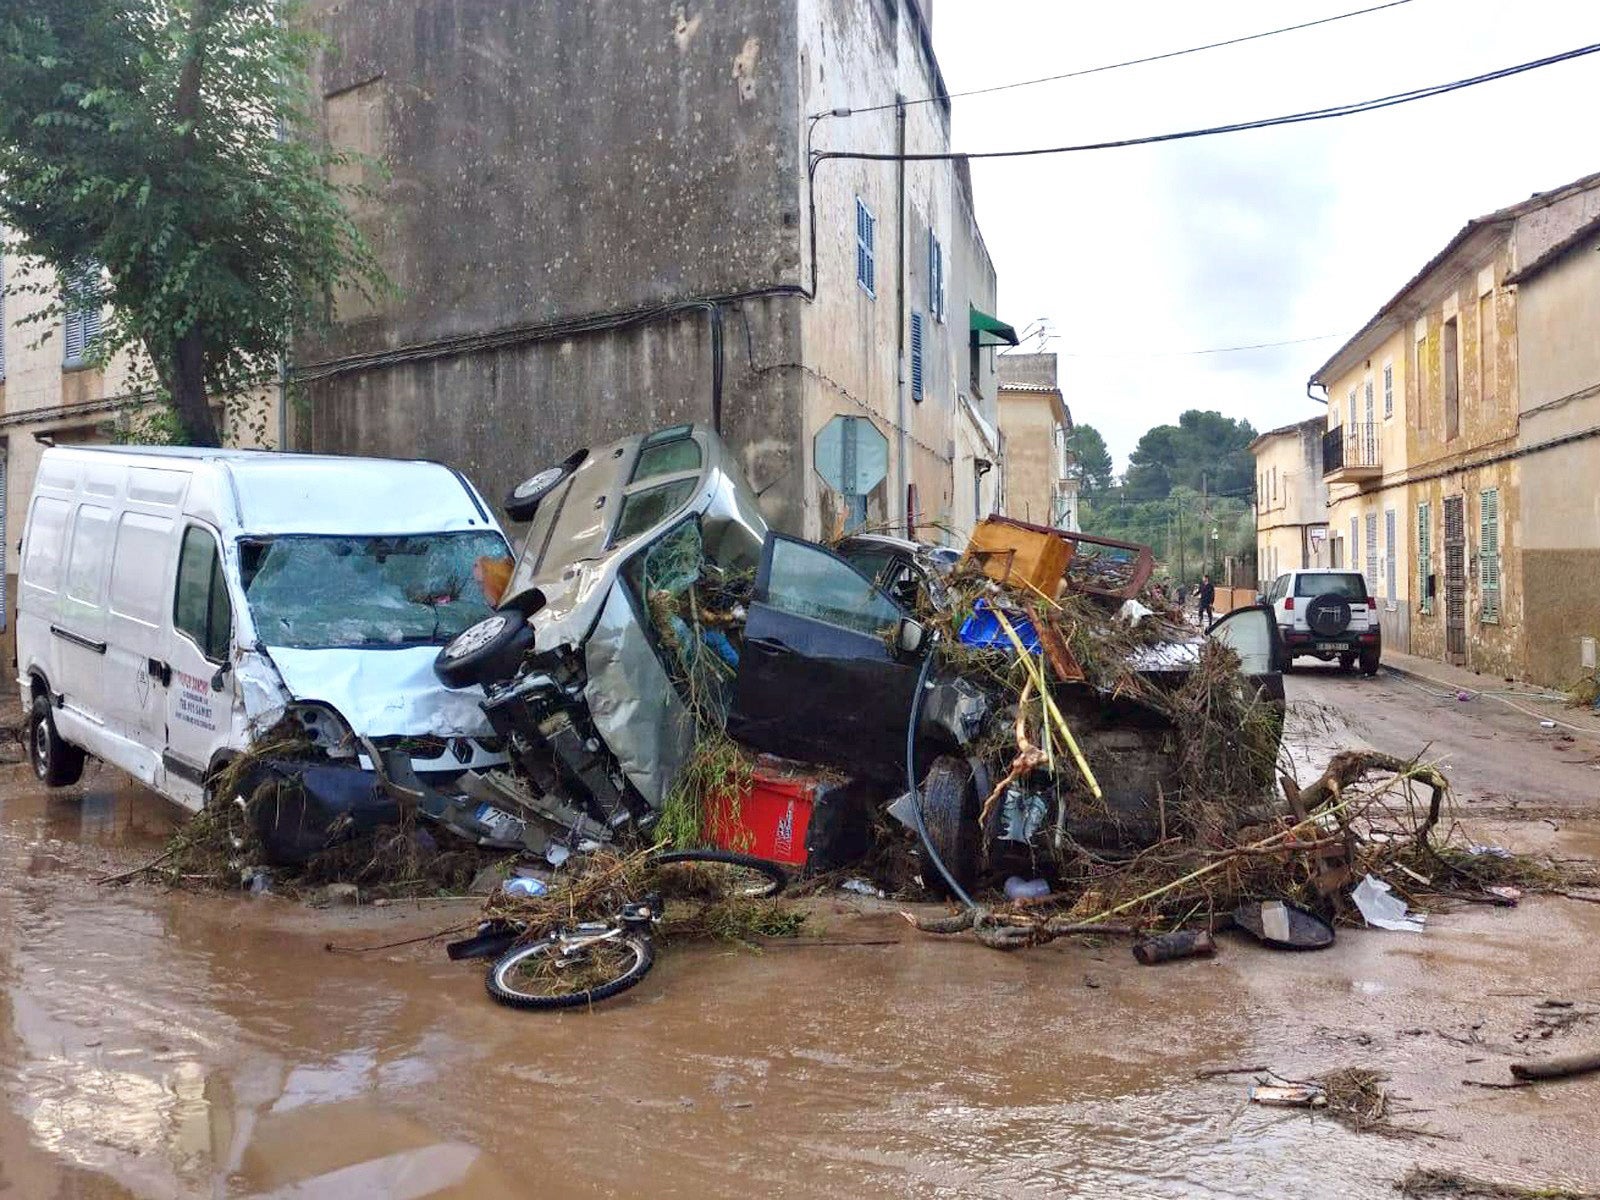 Several vehicles were destroyed after a flash flood hit the village of Sant Llorenc des Cardasar